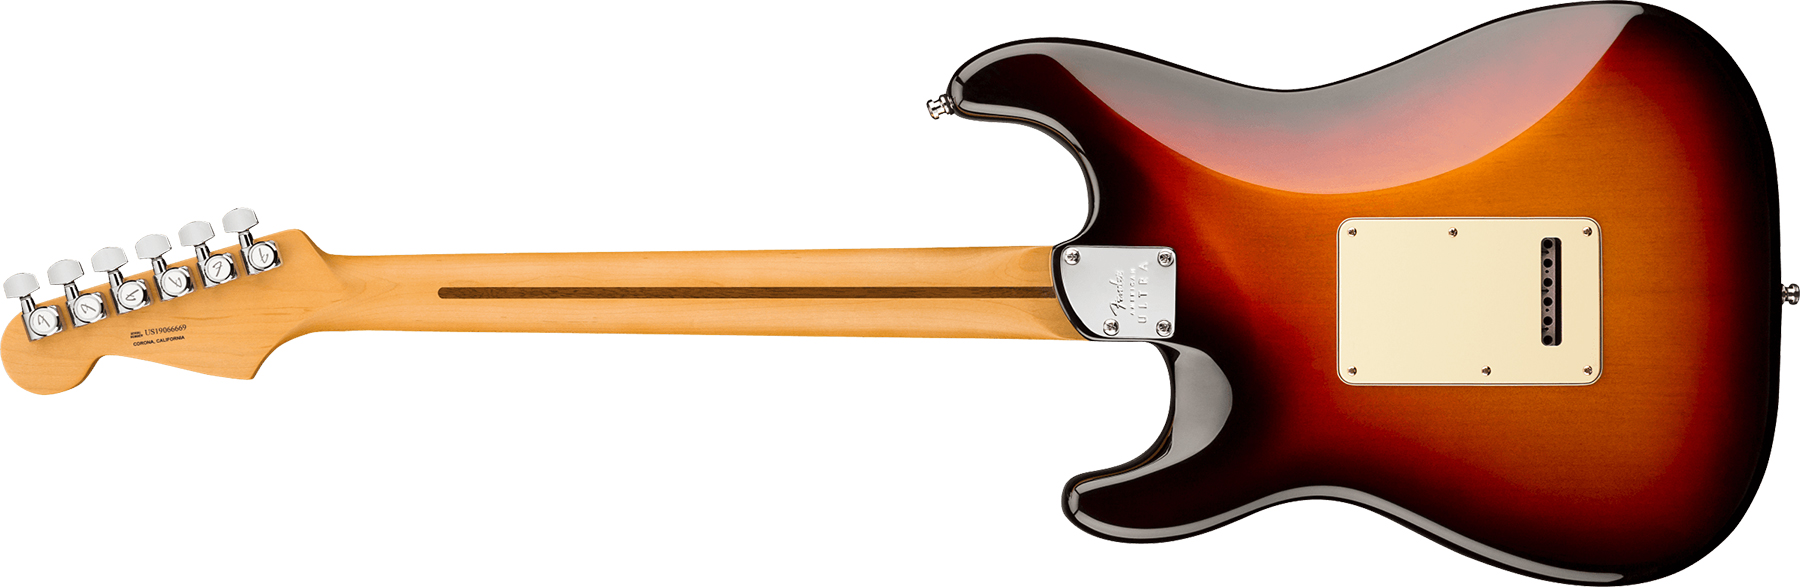 Fender Strat American Ultra Hss 2019 Usa Mn - Ultraburst - E-Gitarre in Str-Form - Variation 1